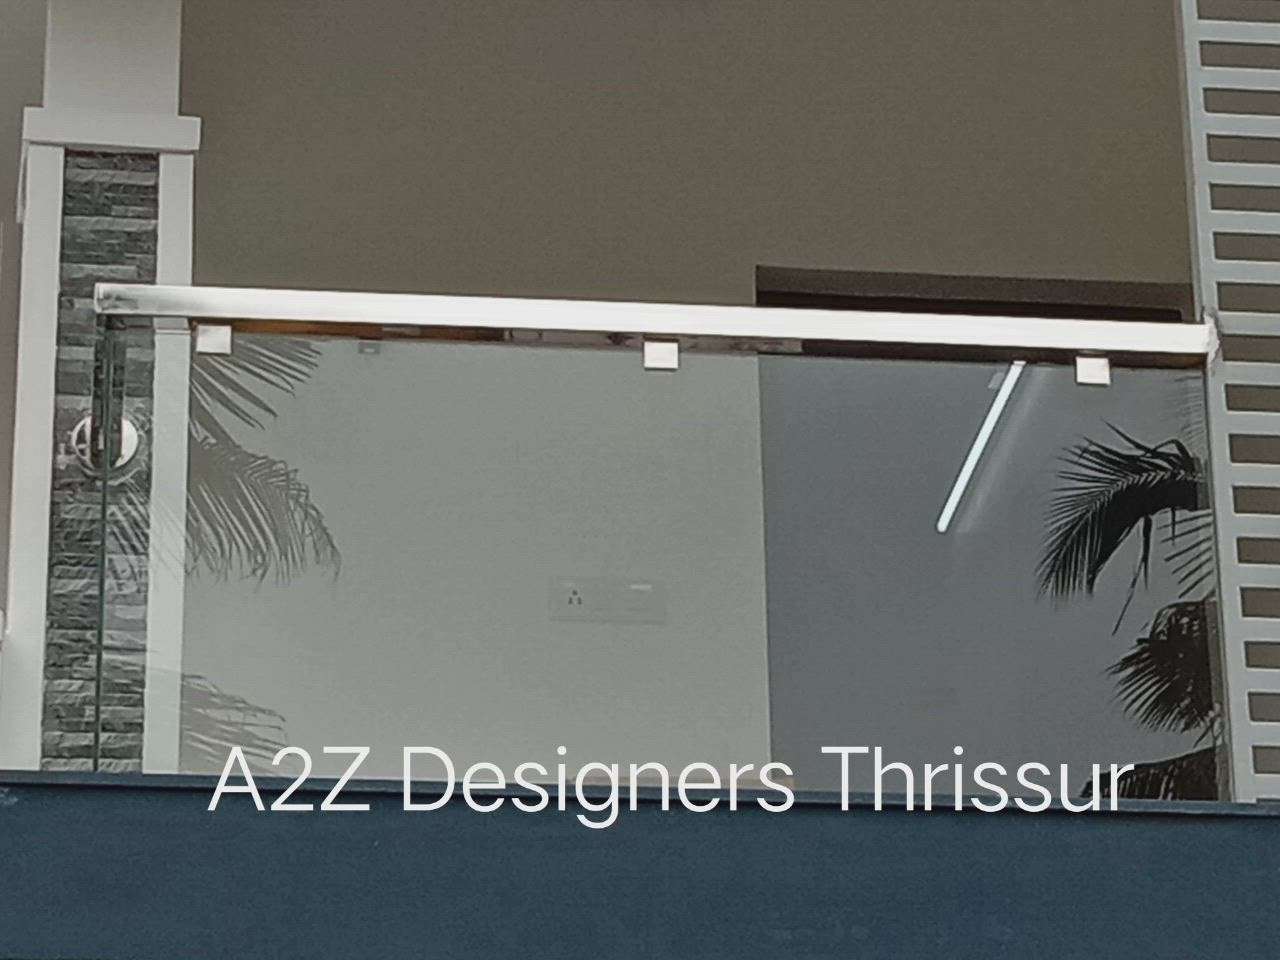 Aluminium & Acp. A2Z Designers Thrissur Irinjalakuda